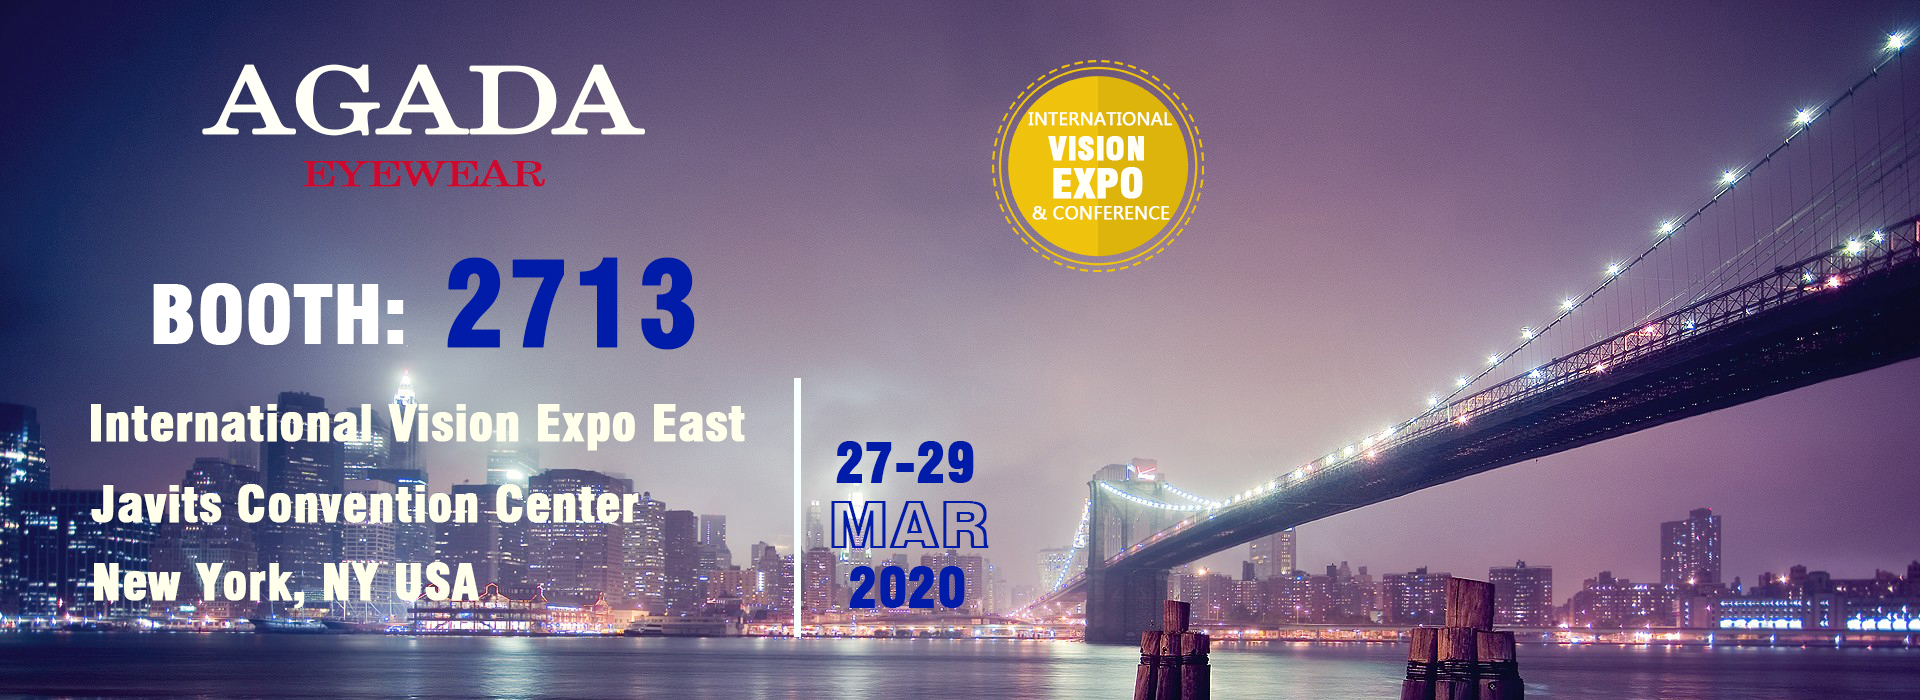 2020 International Vision Expo